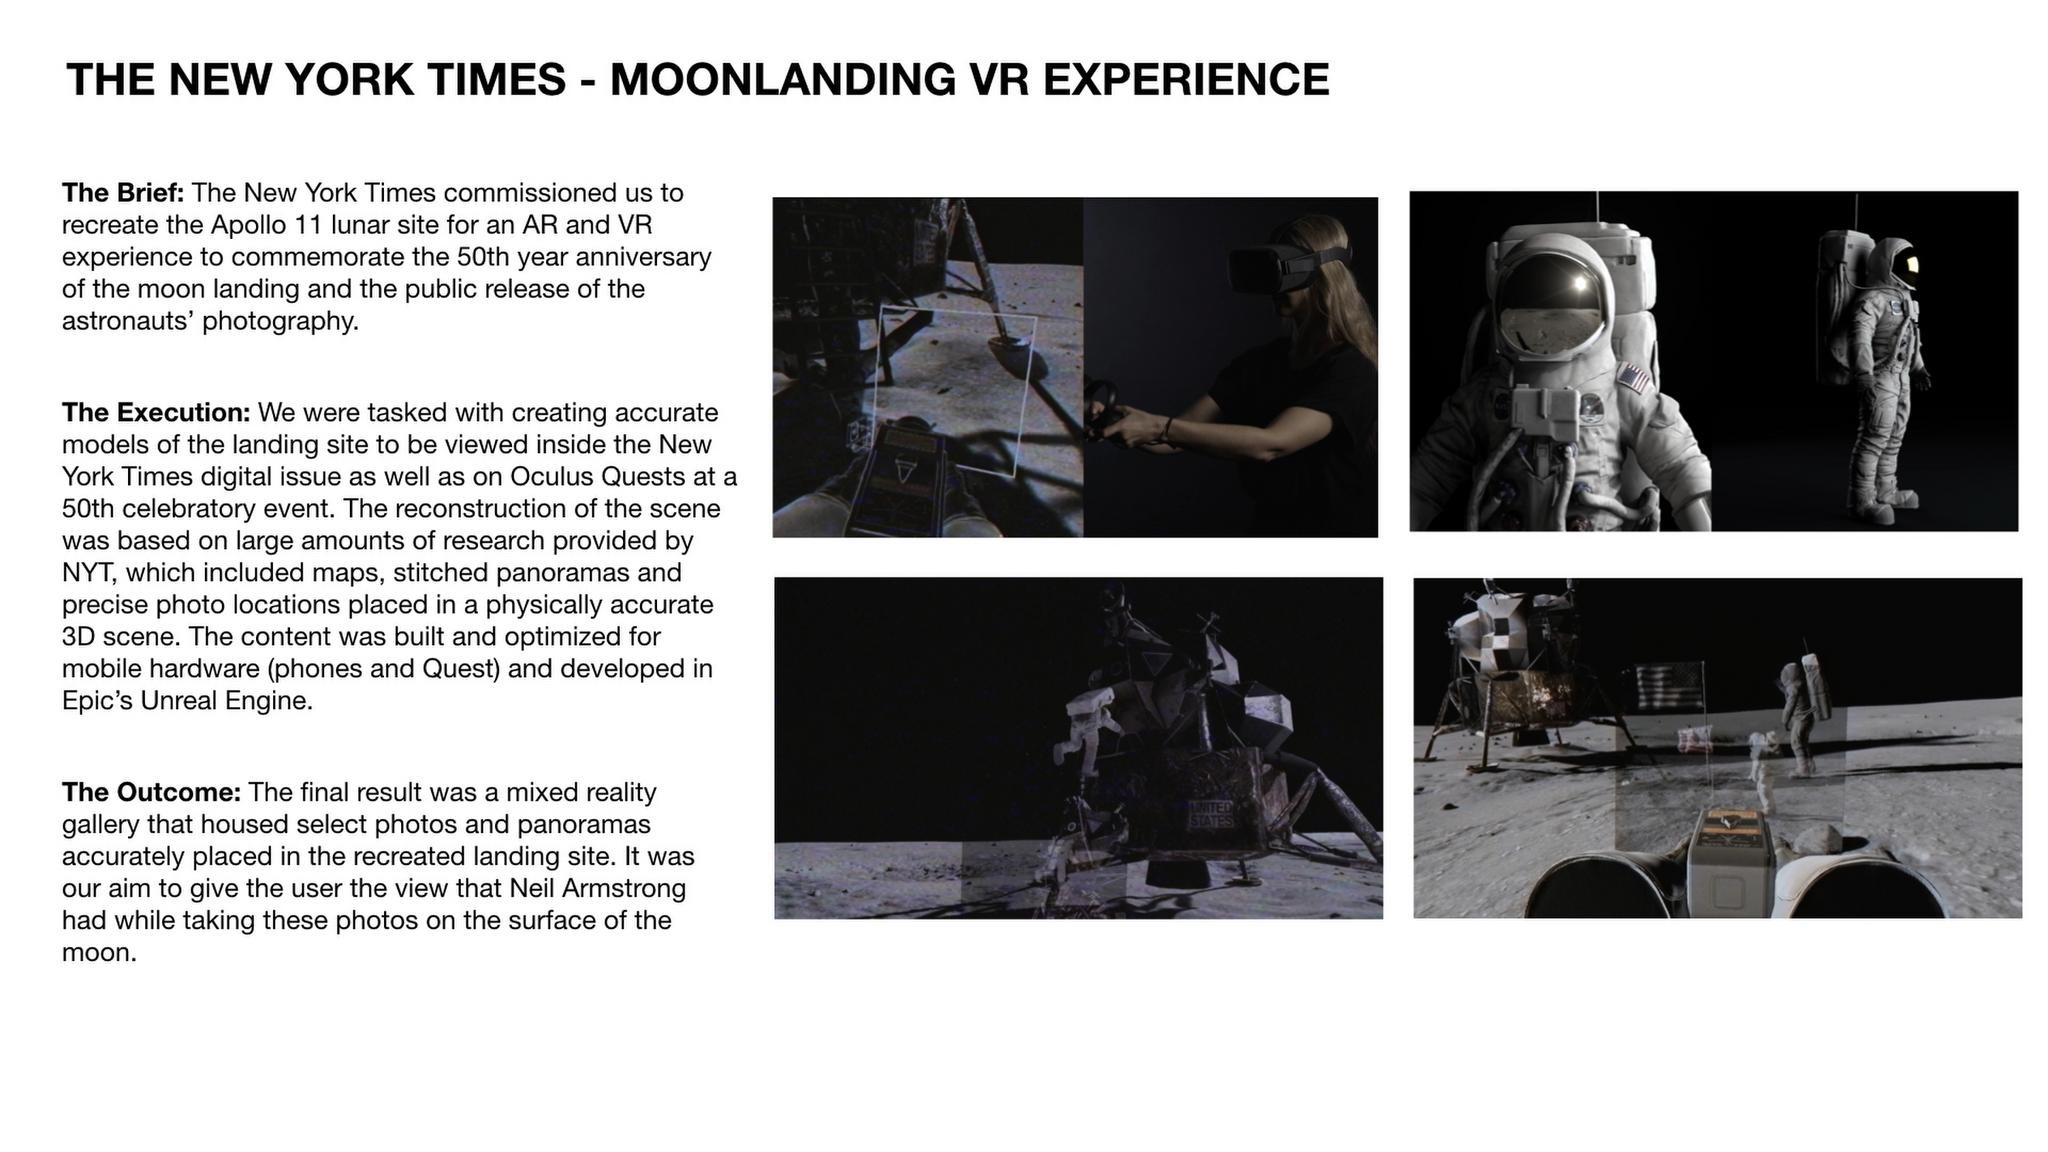 Moonlanding VR Experience